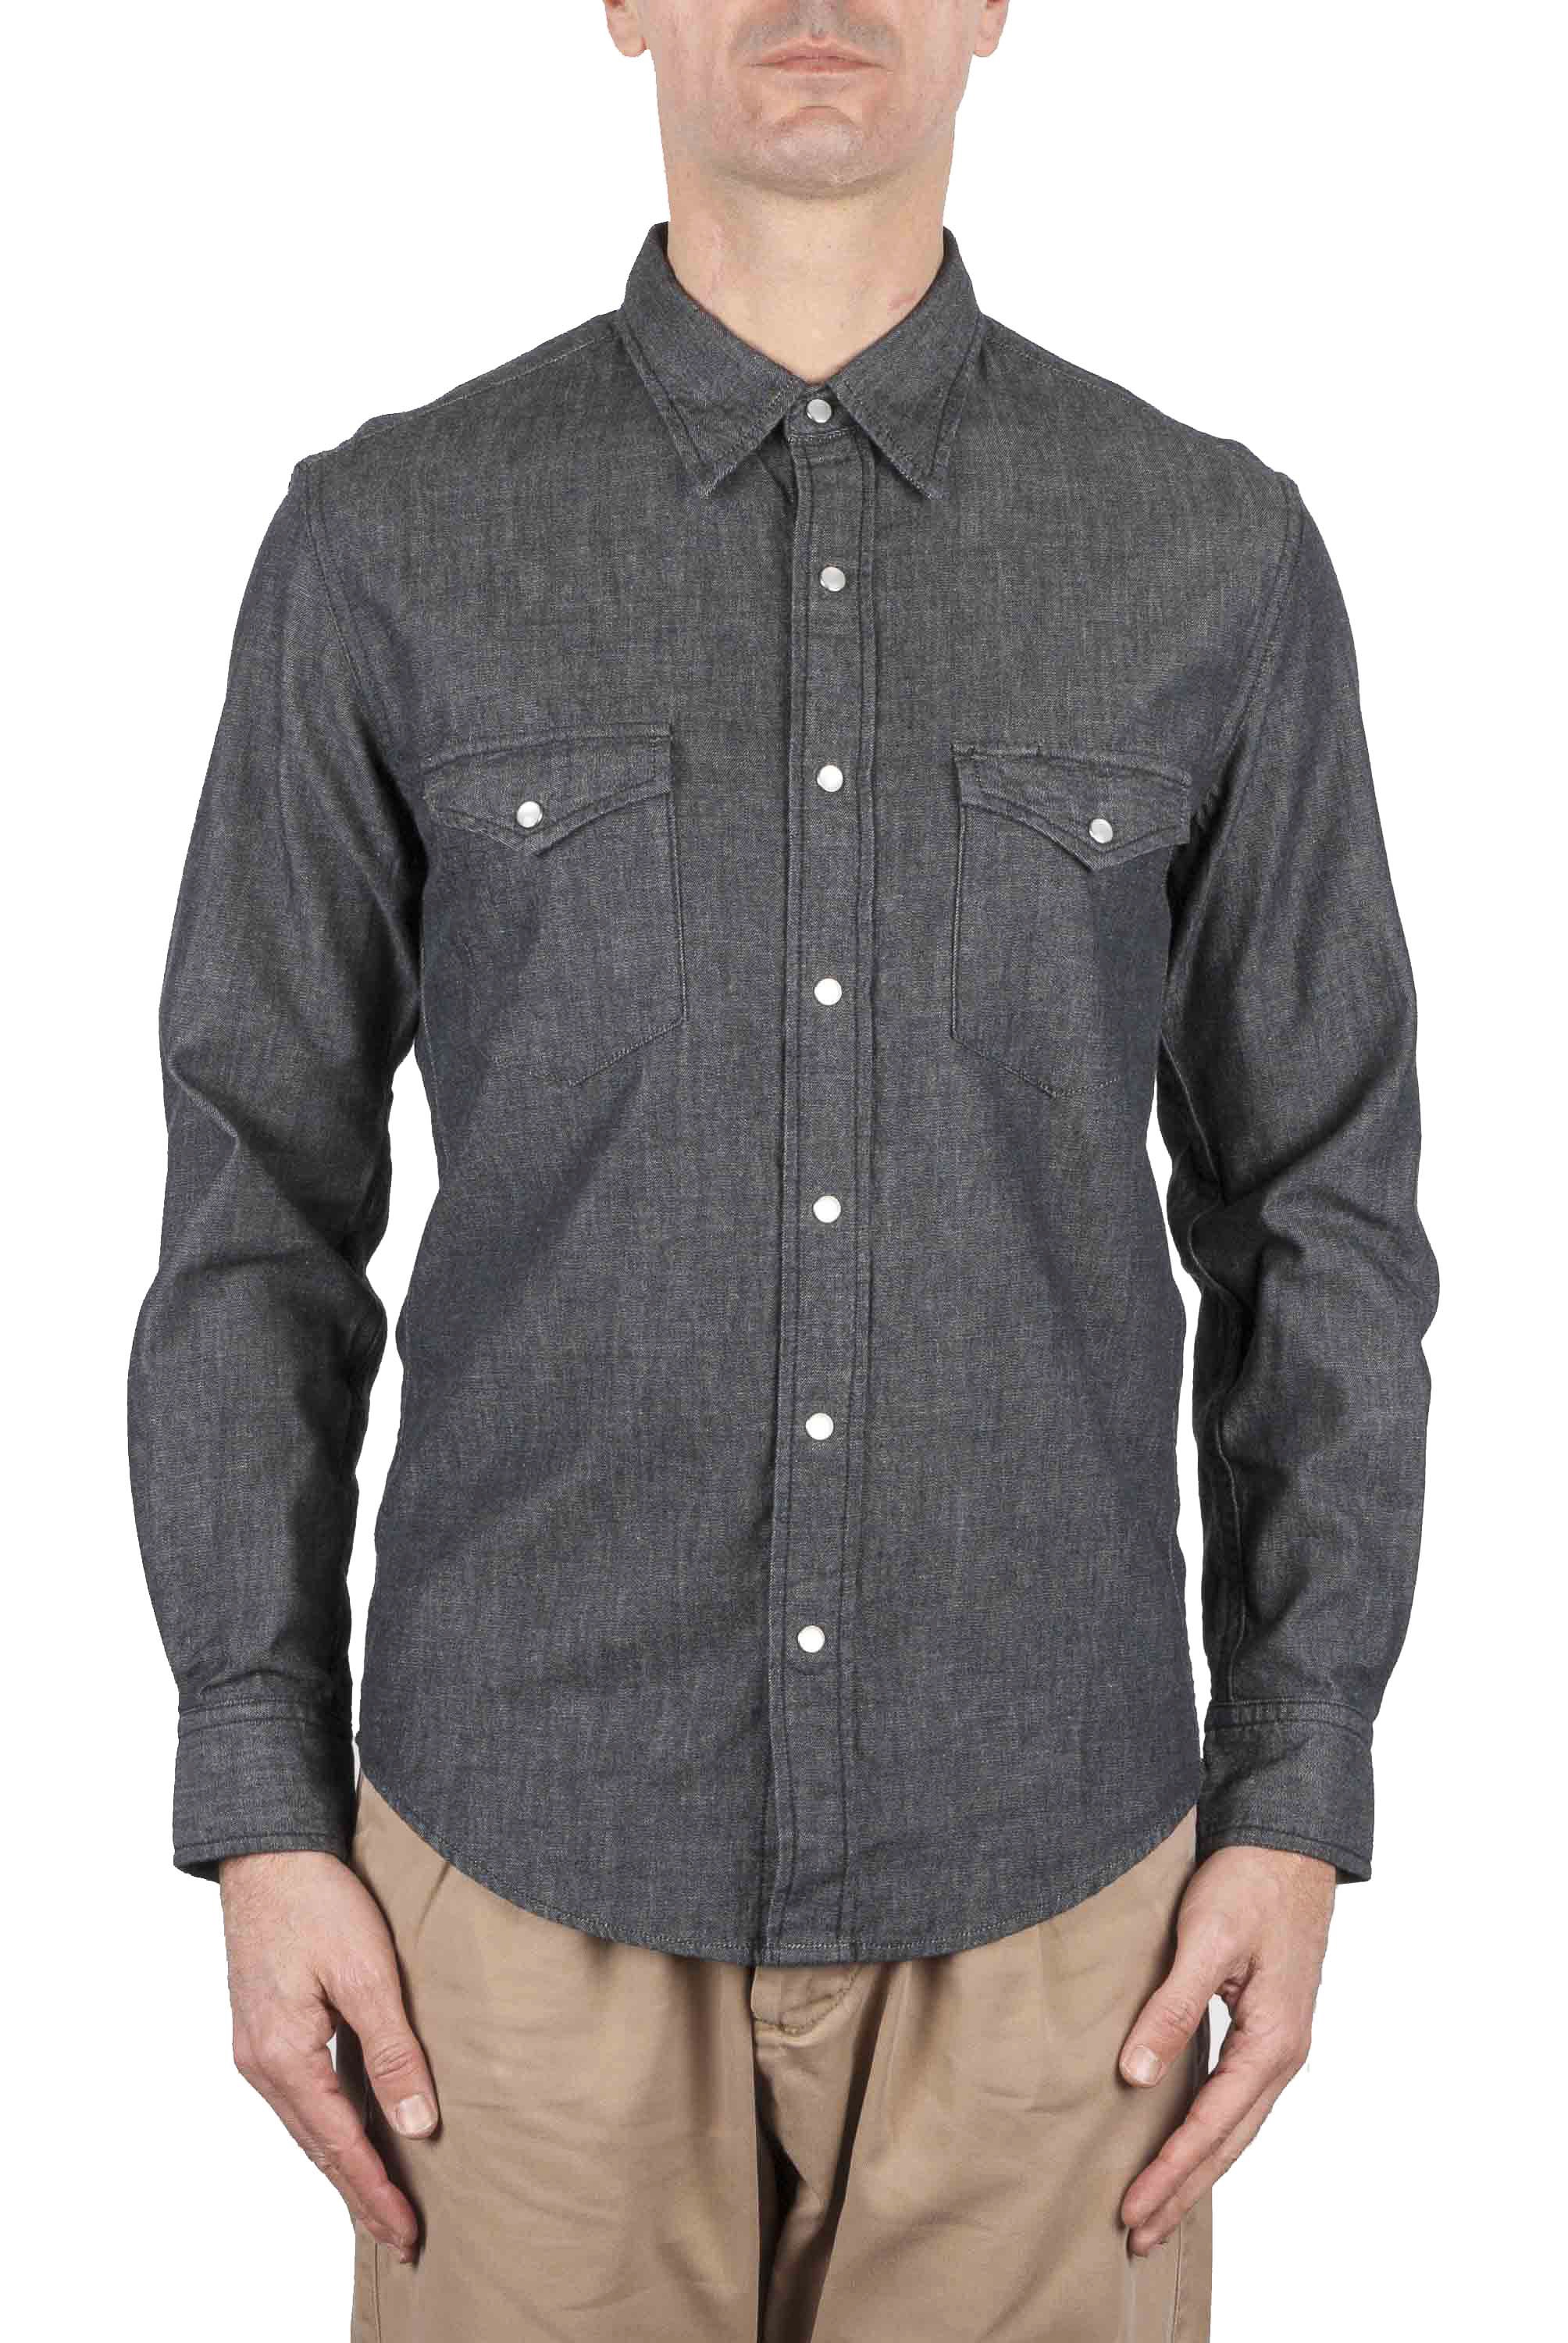 SBU 01614 Dark grey chambray cotton western shirt 01